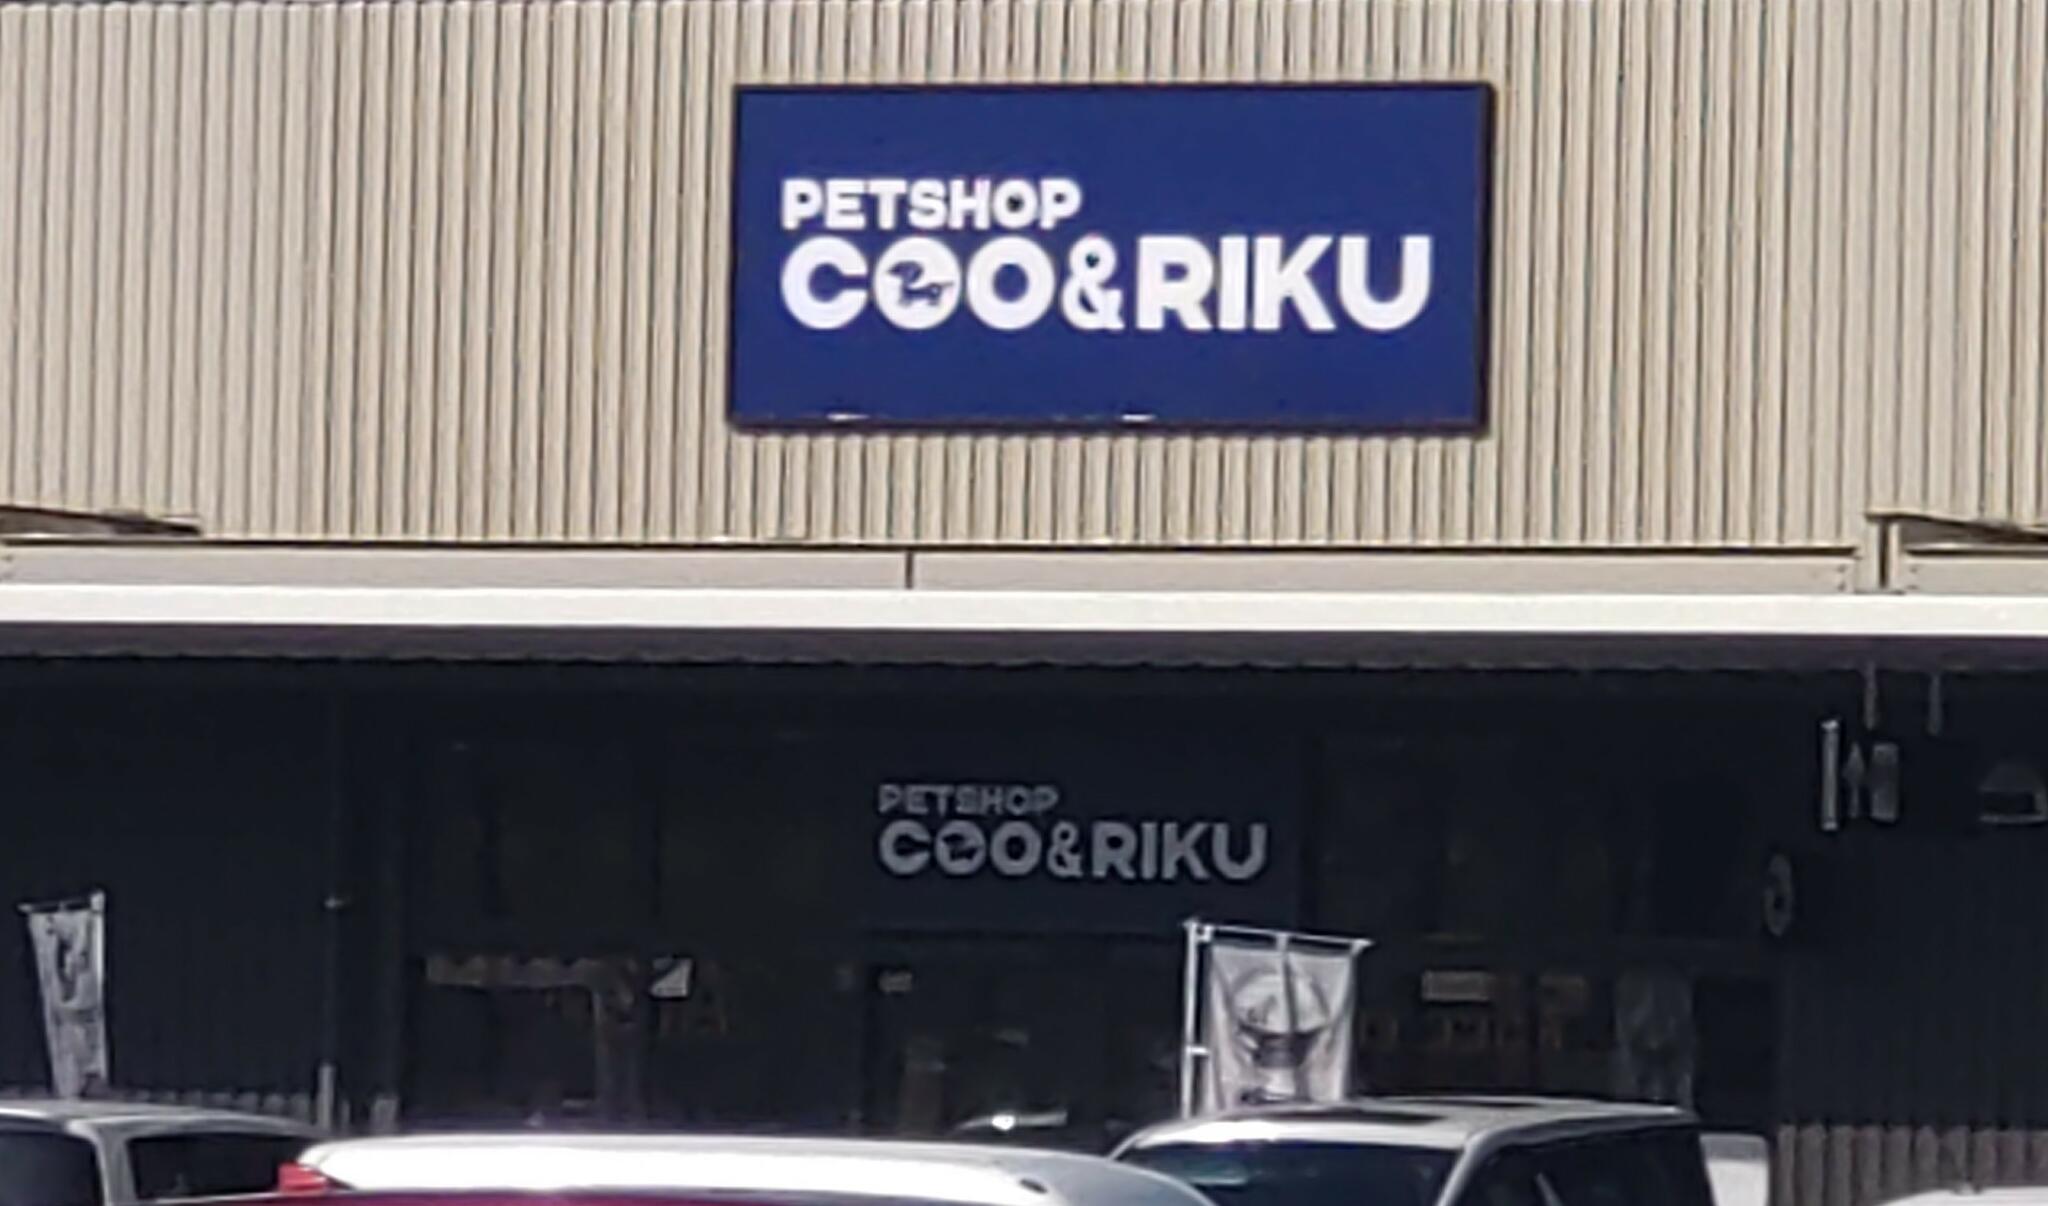 COO&RIKU イオンタウン川之江店の代表写真3